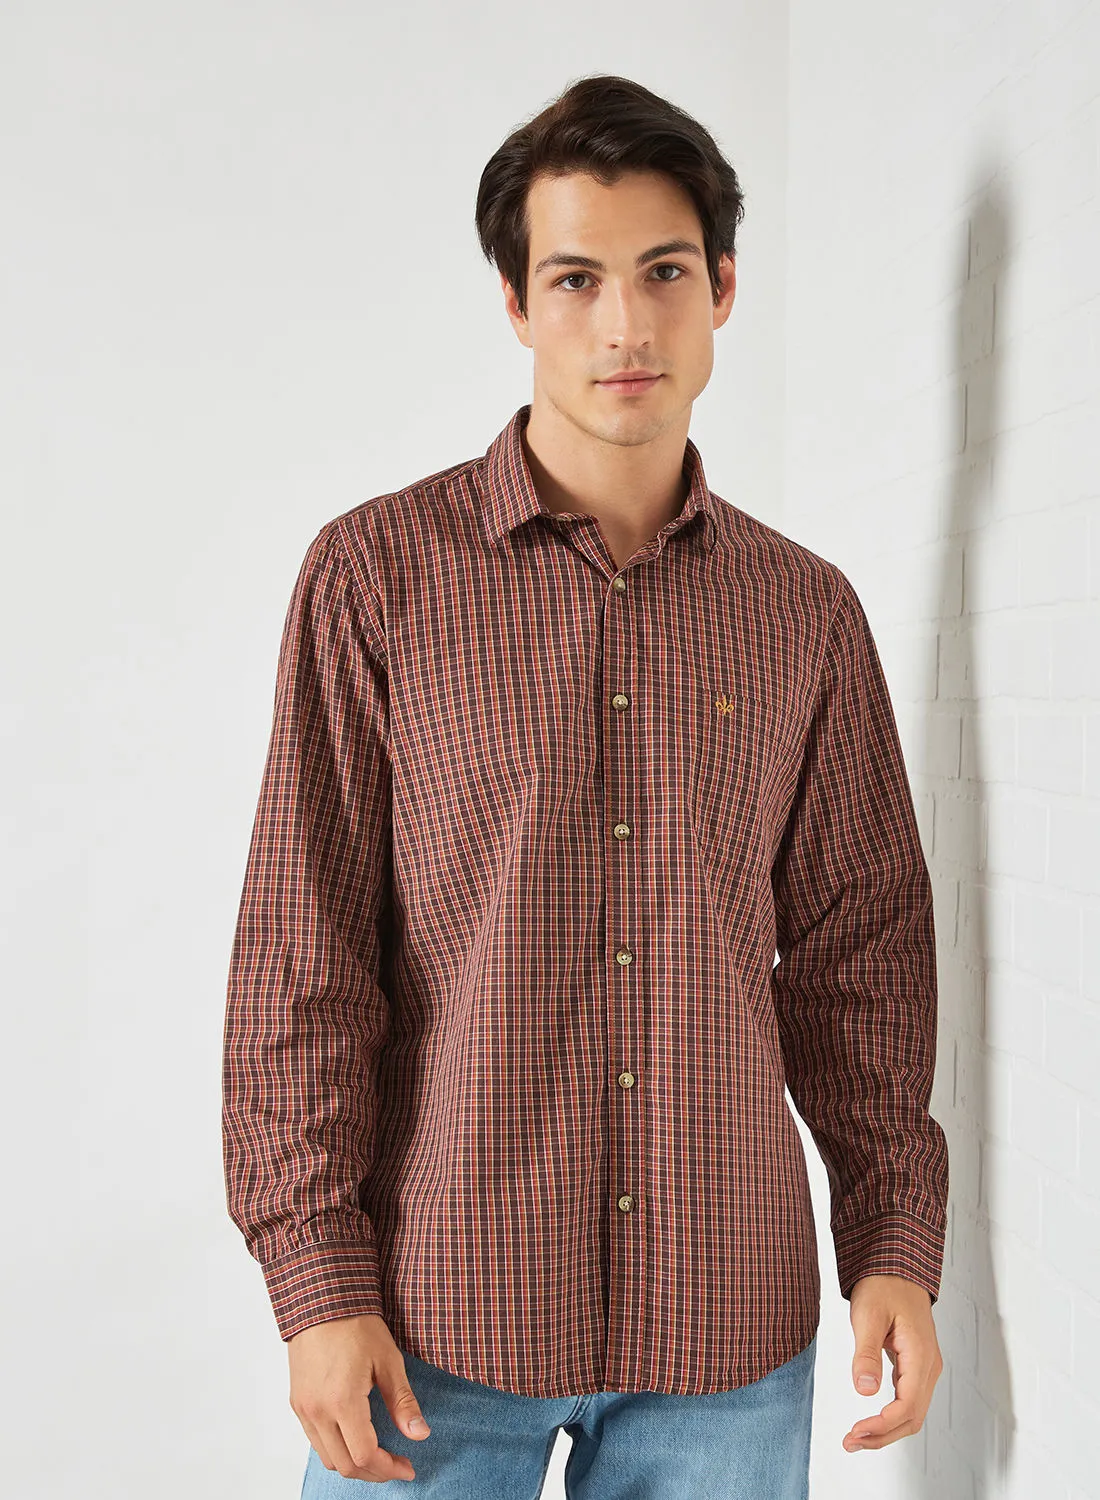 QUWA Casual Long Sleeve Checked Pattern Shirt Checkered Dark Brown